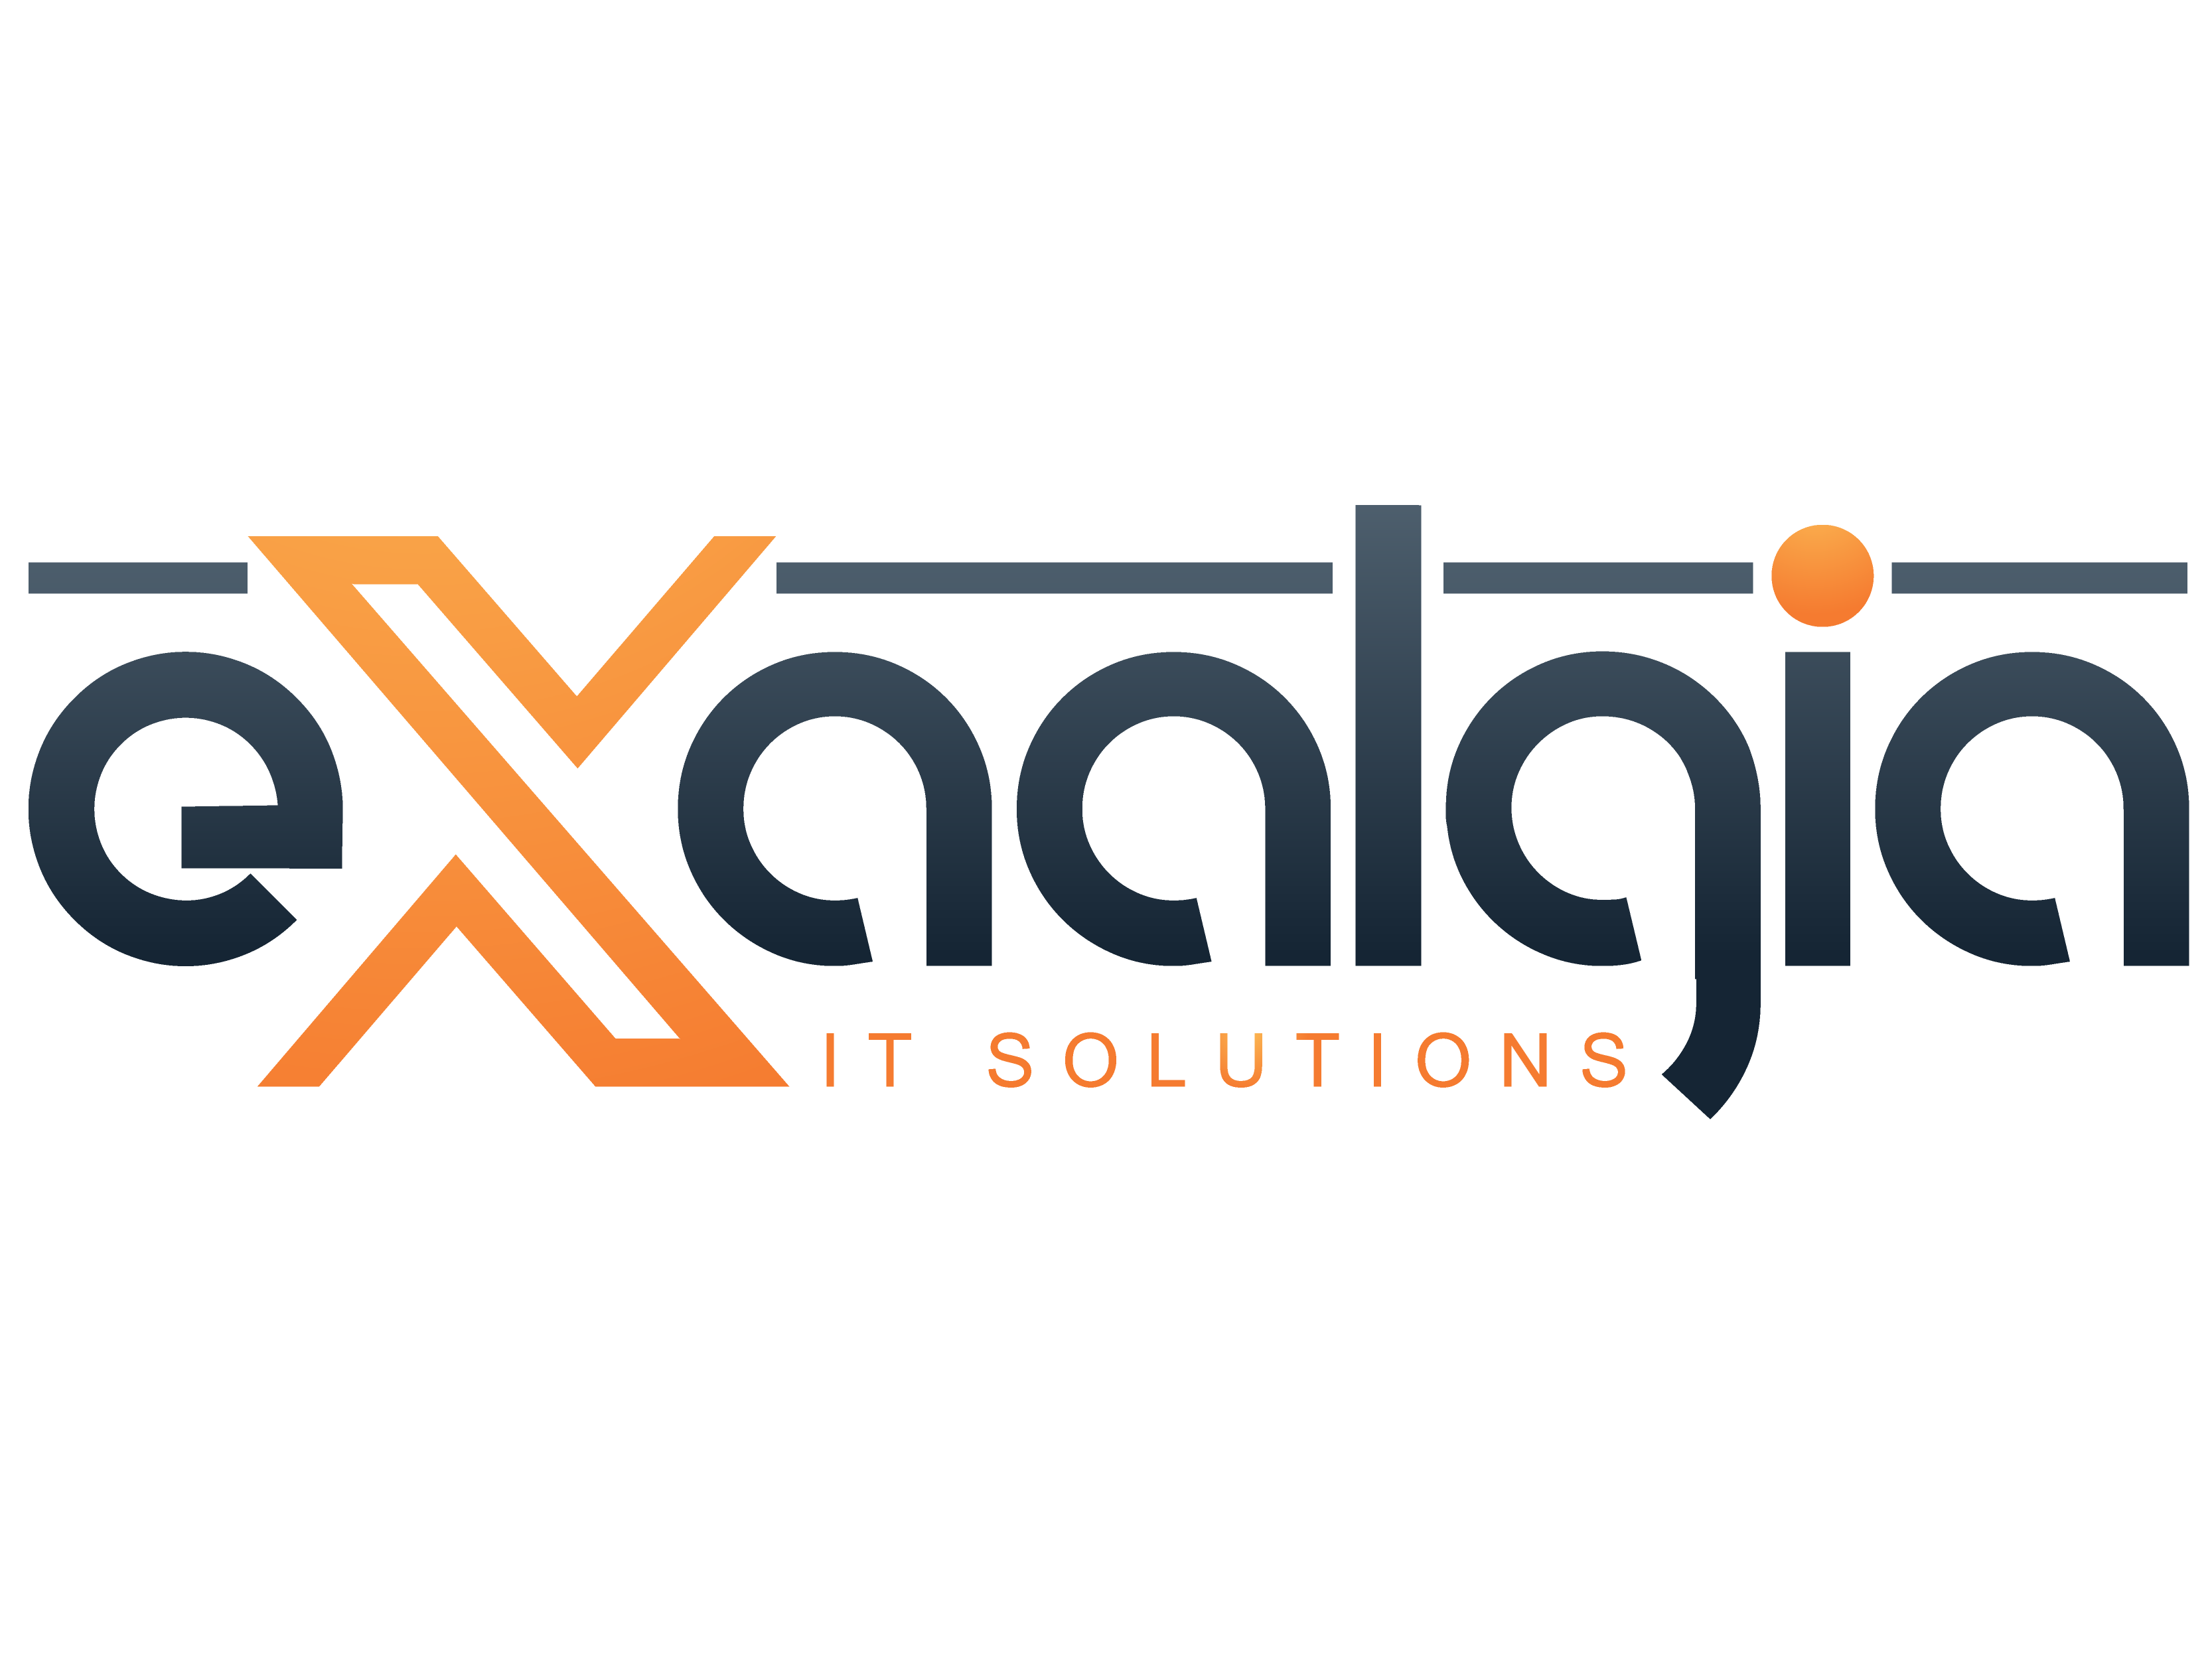 Best Search Engine Optimization Company Logo: Exaalgia